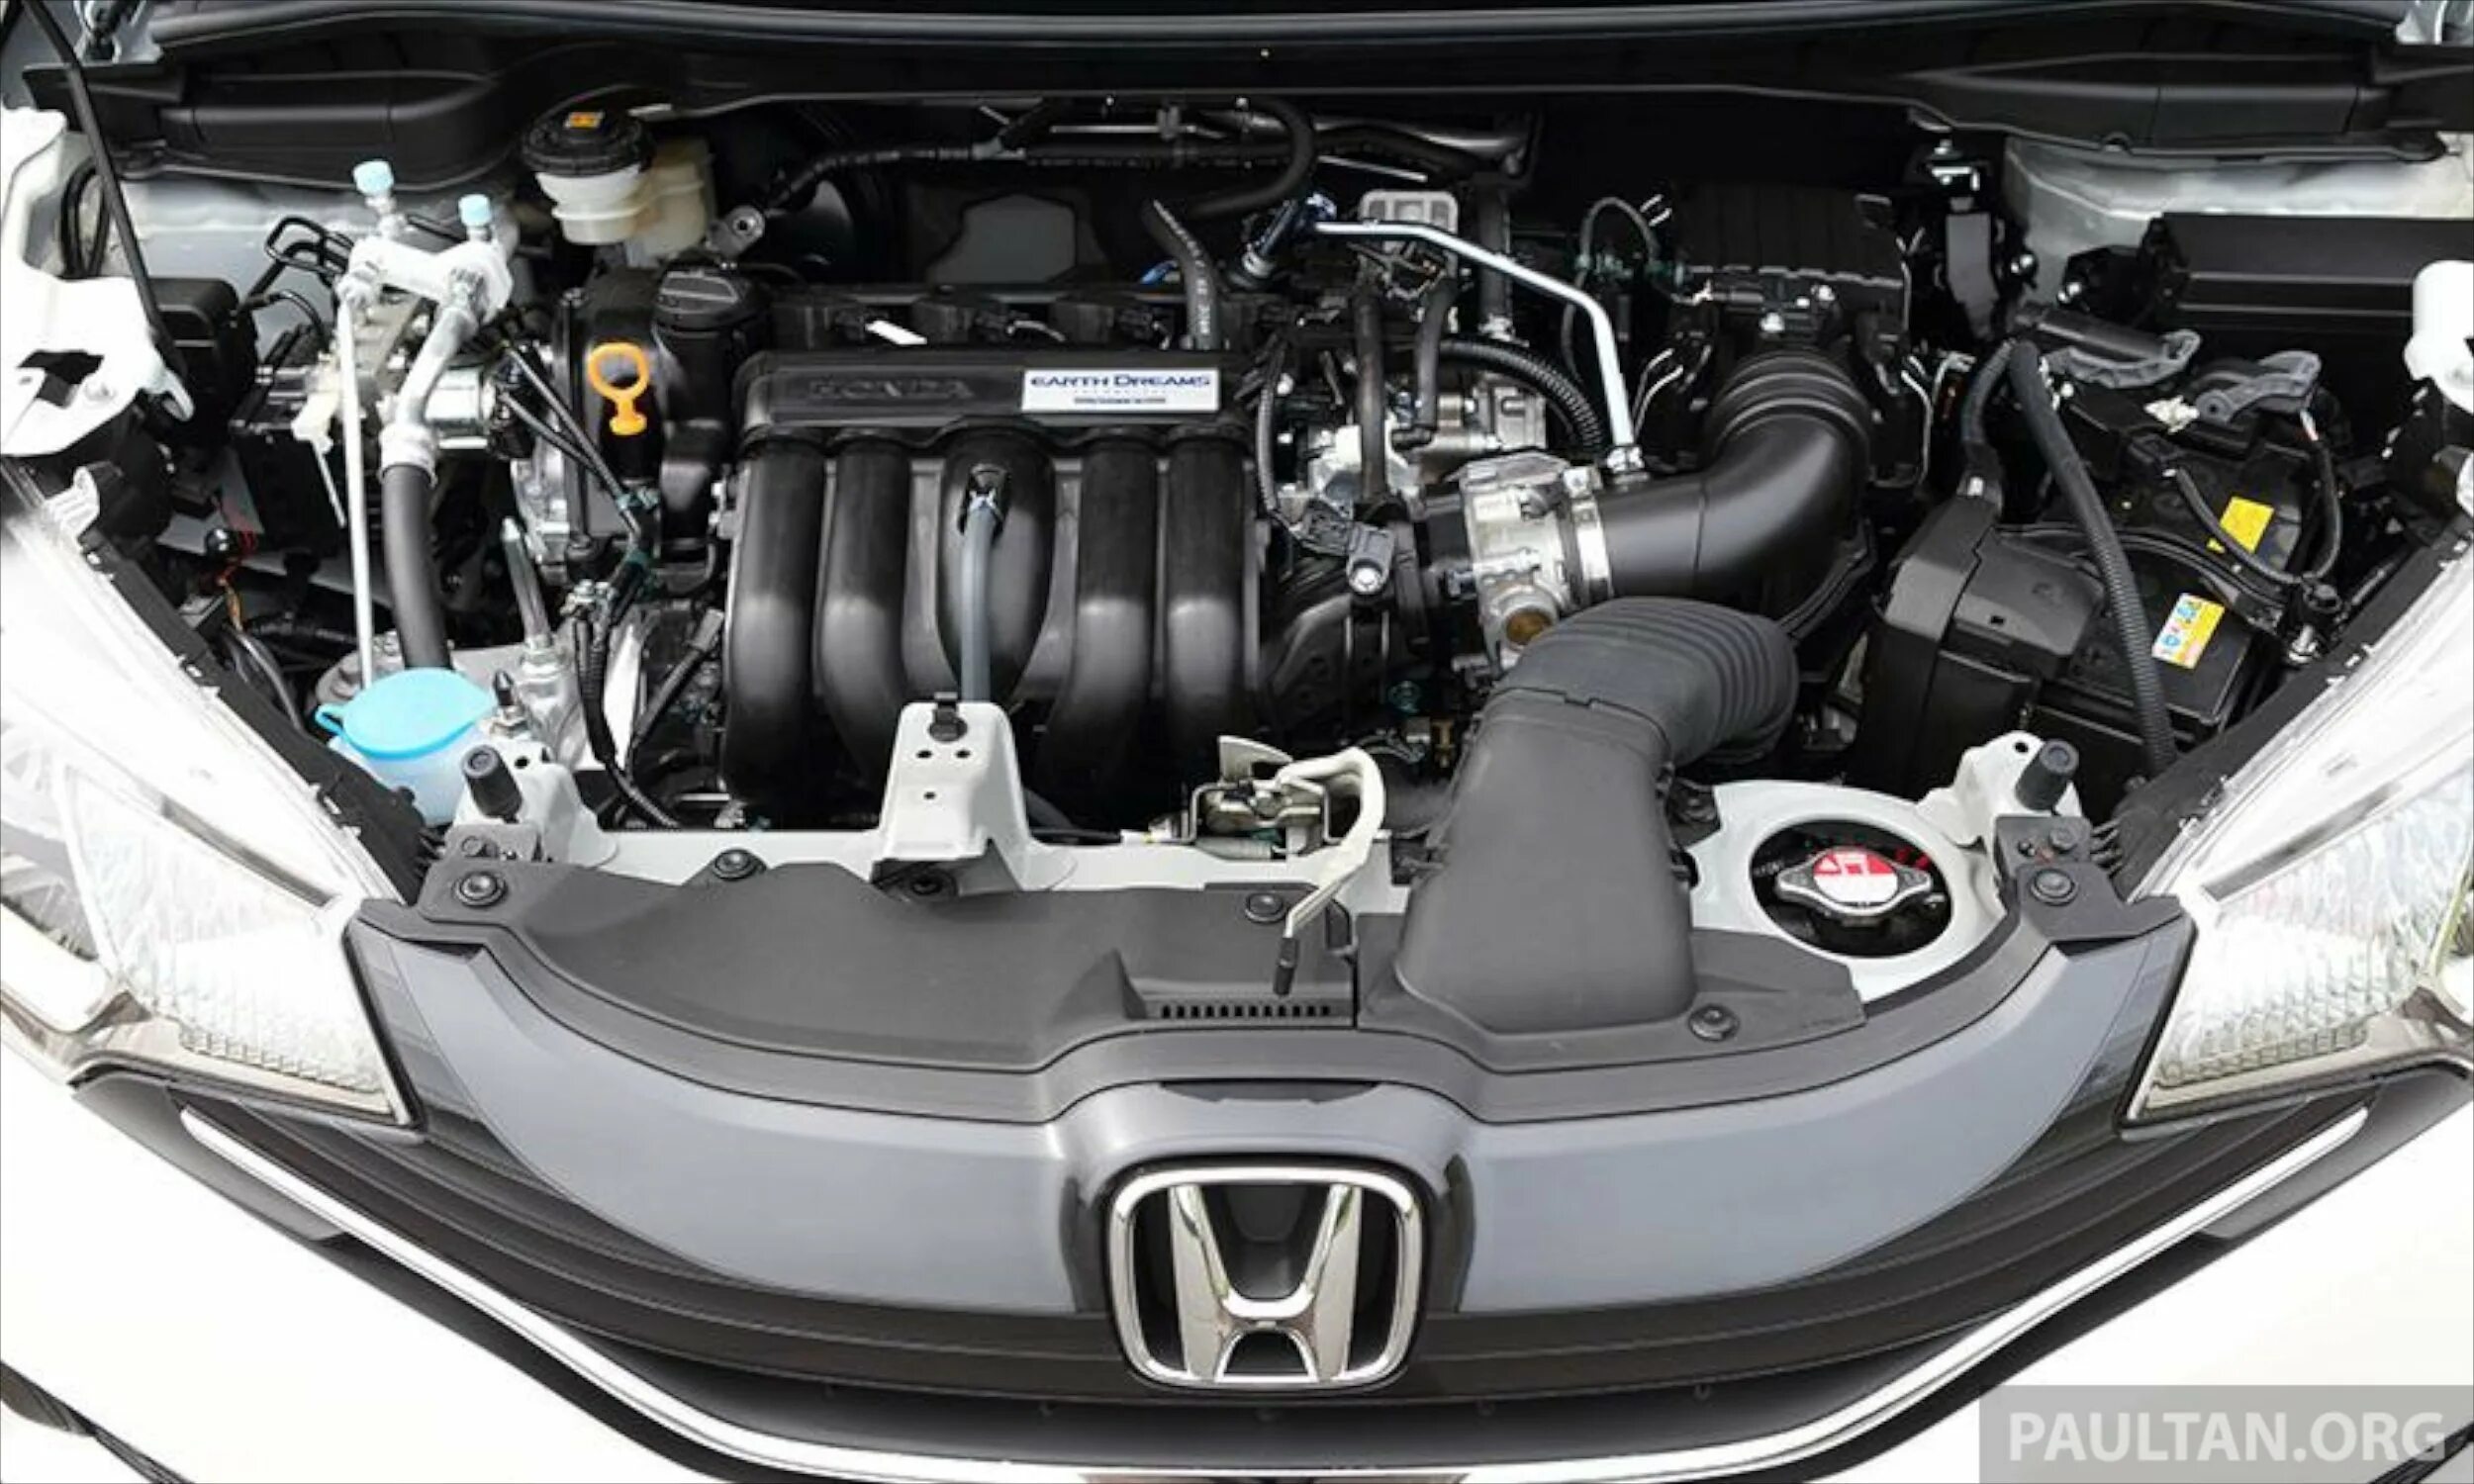 Двигатель Honda Fit Hybrid 2014. Двигатель: Honda Fit 2015. Двигатель Honda Fit 1.3. Двигатель на Хонда фит гибрид 2014 год.